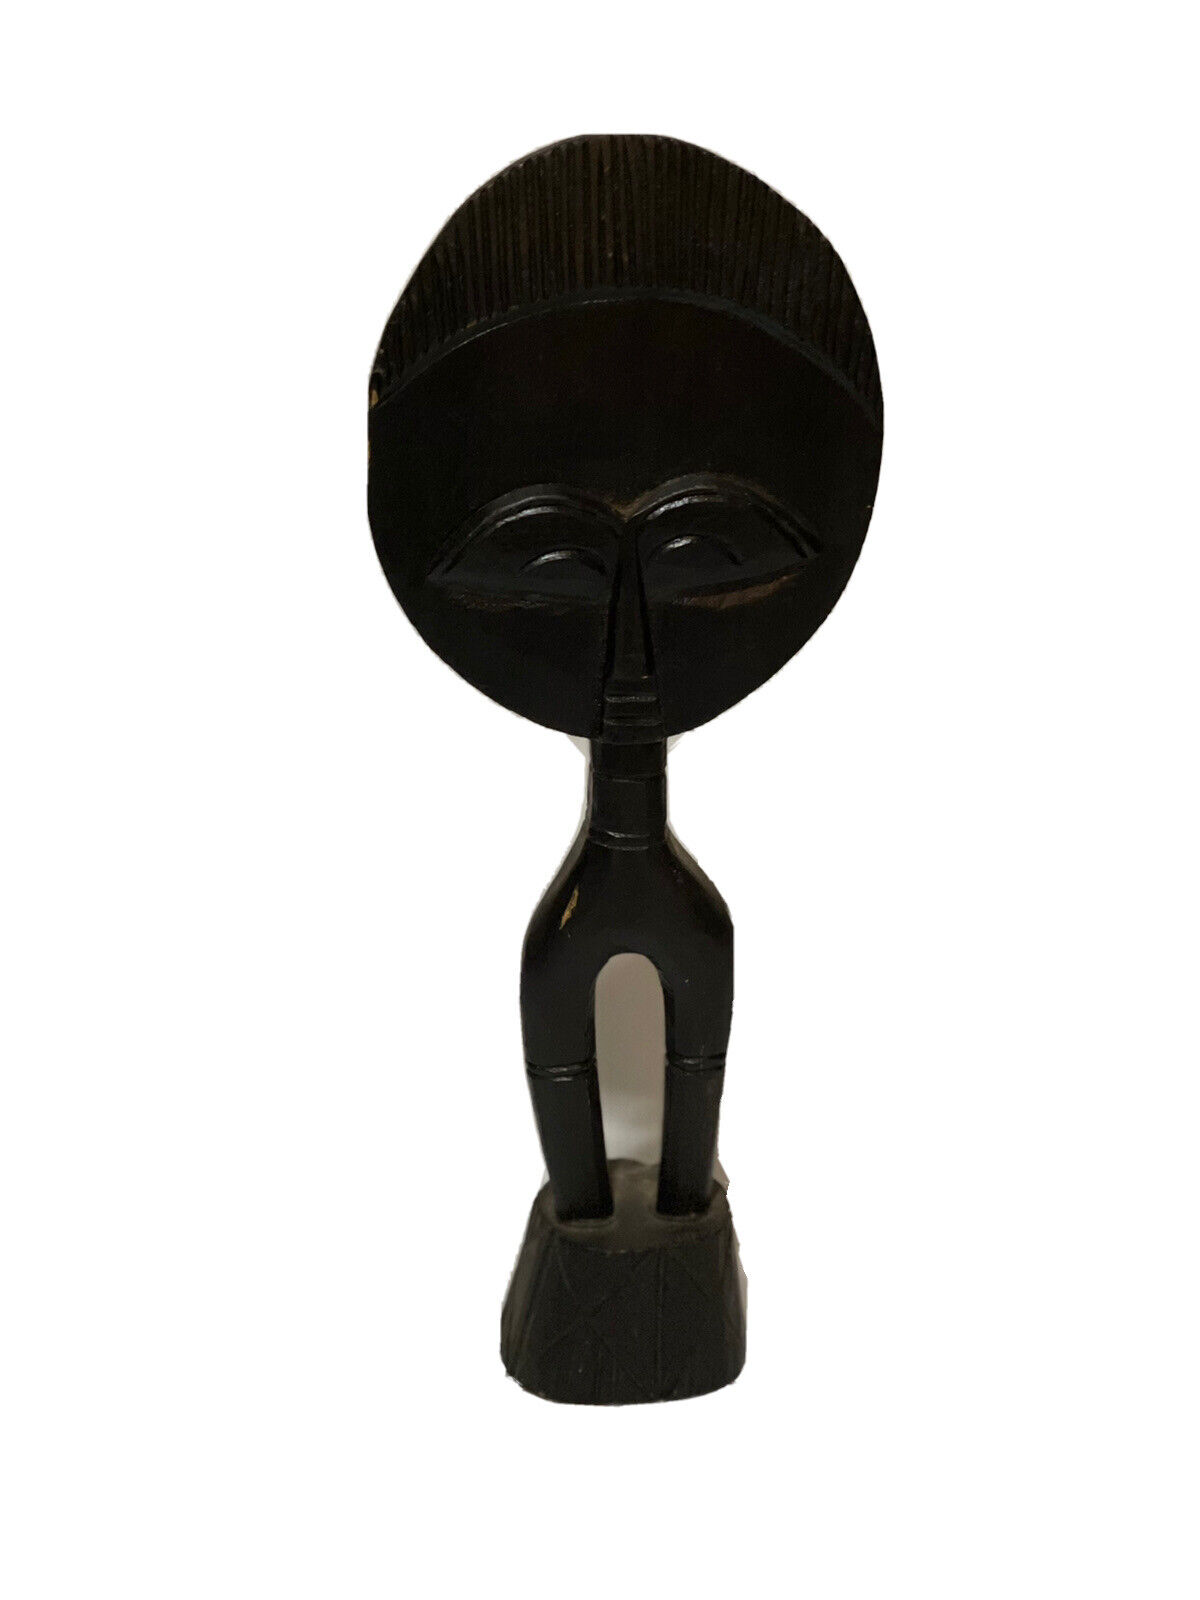 AKuba Doll Fertility Statue 16.5 Wood Carved West Africa  (Ghana) Ashanti Tribe